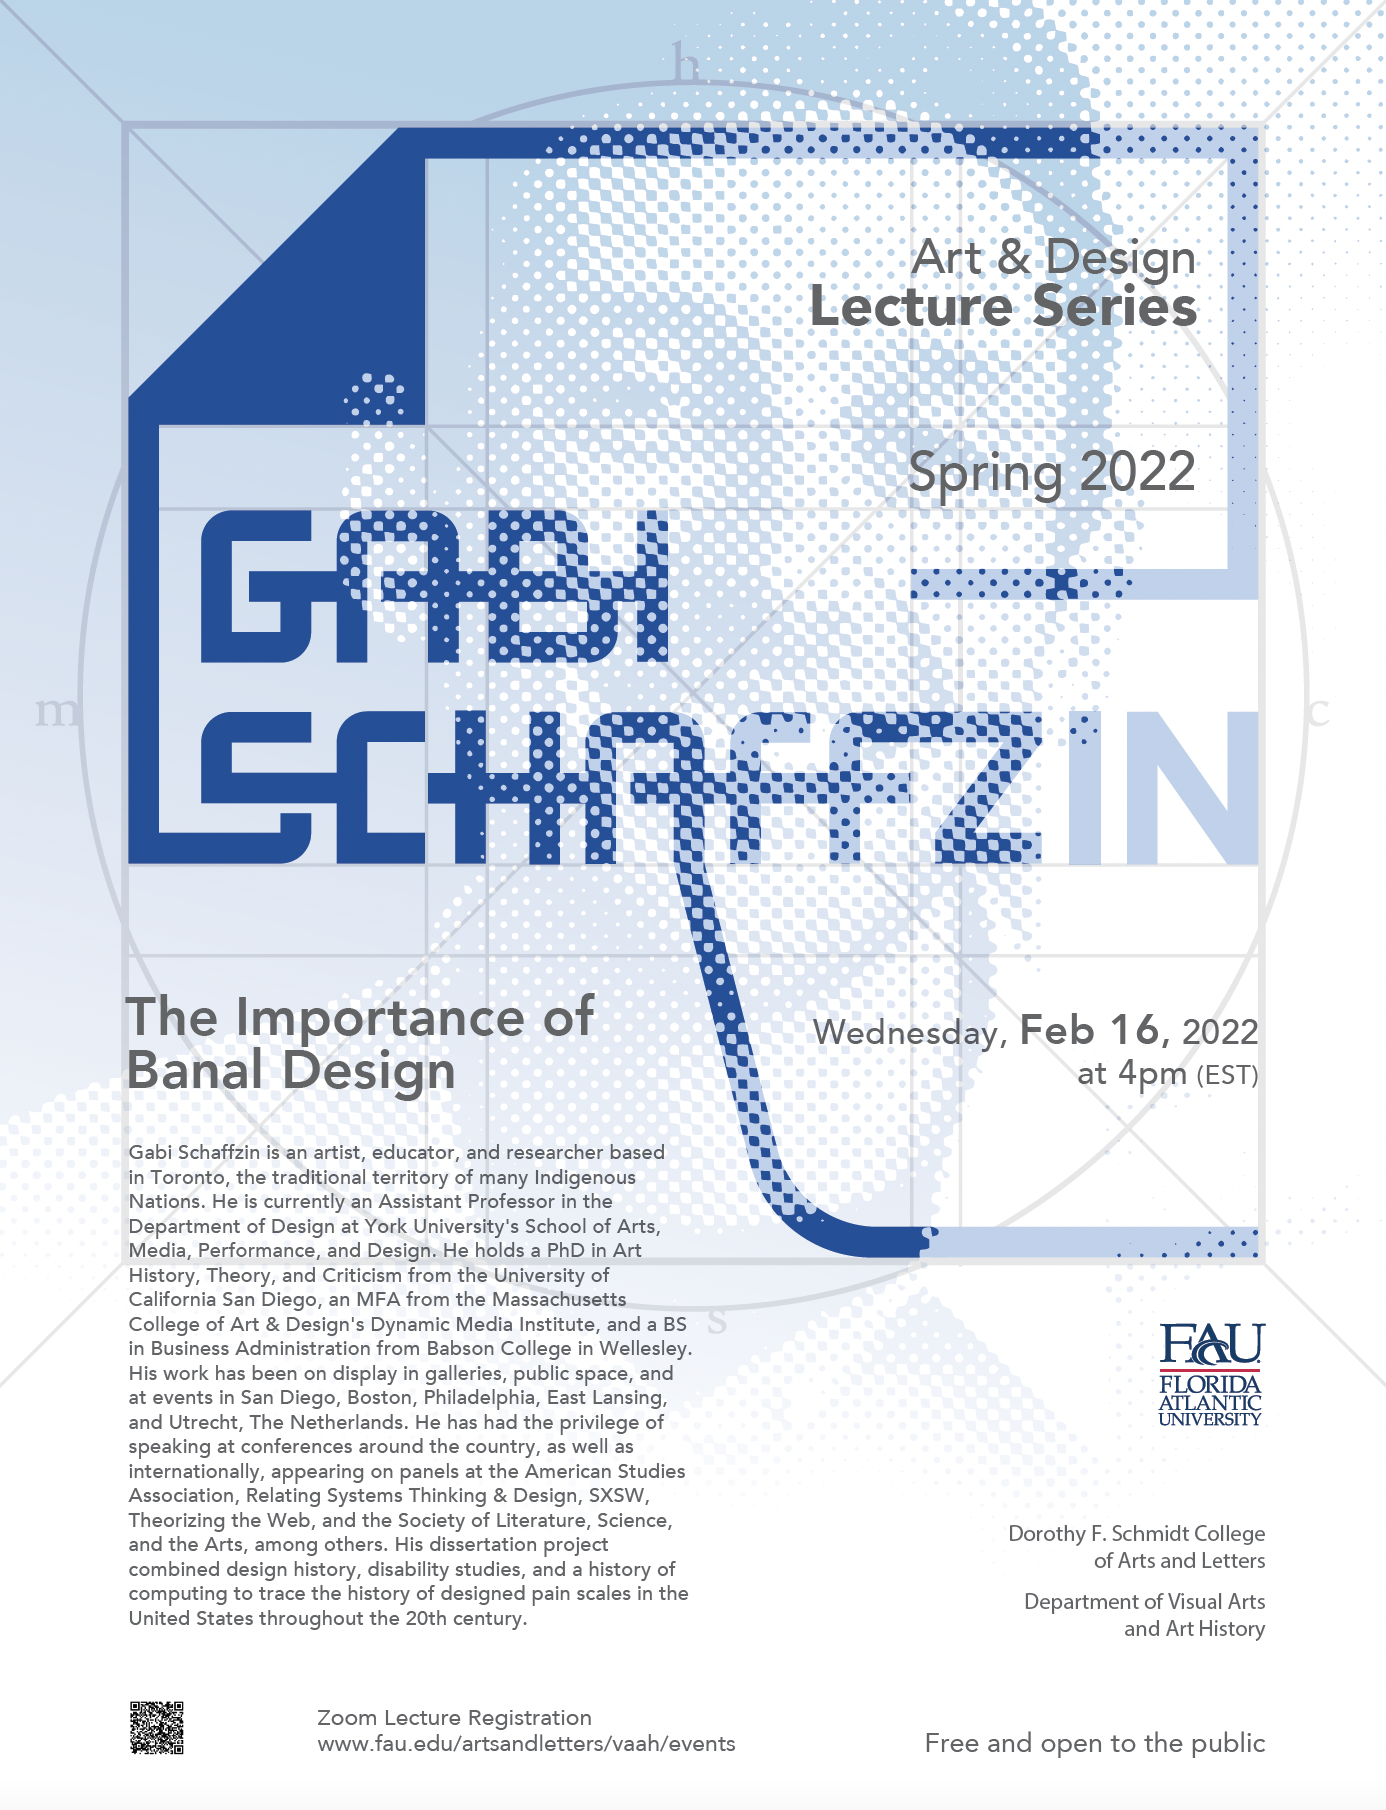 Gabi Lecture Poster